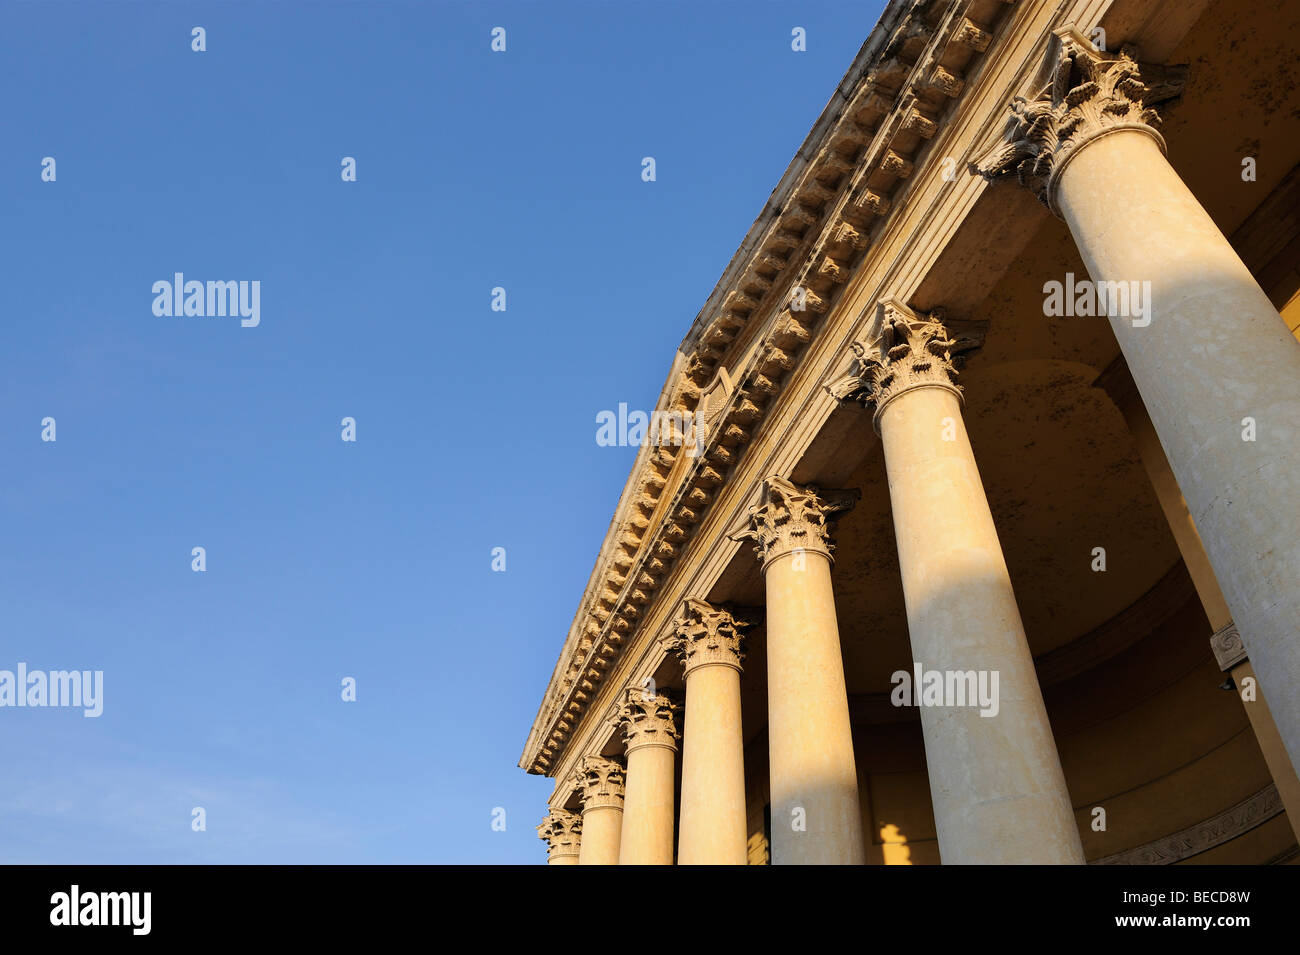 Architectural detail, columns of the Palazzo Barbieri, City Hall, Verona, Lake Garda, Italy, Europe Stock Photo